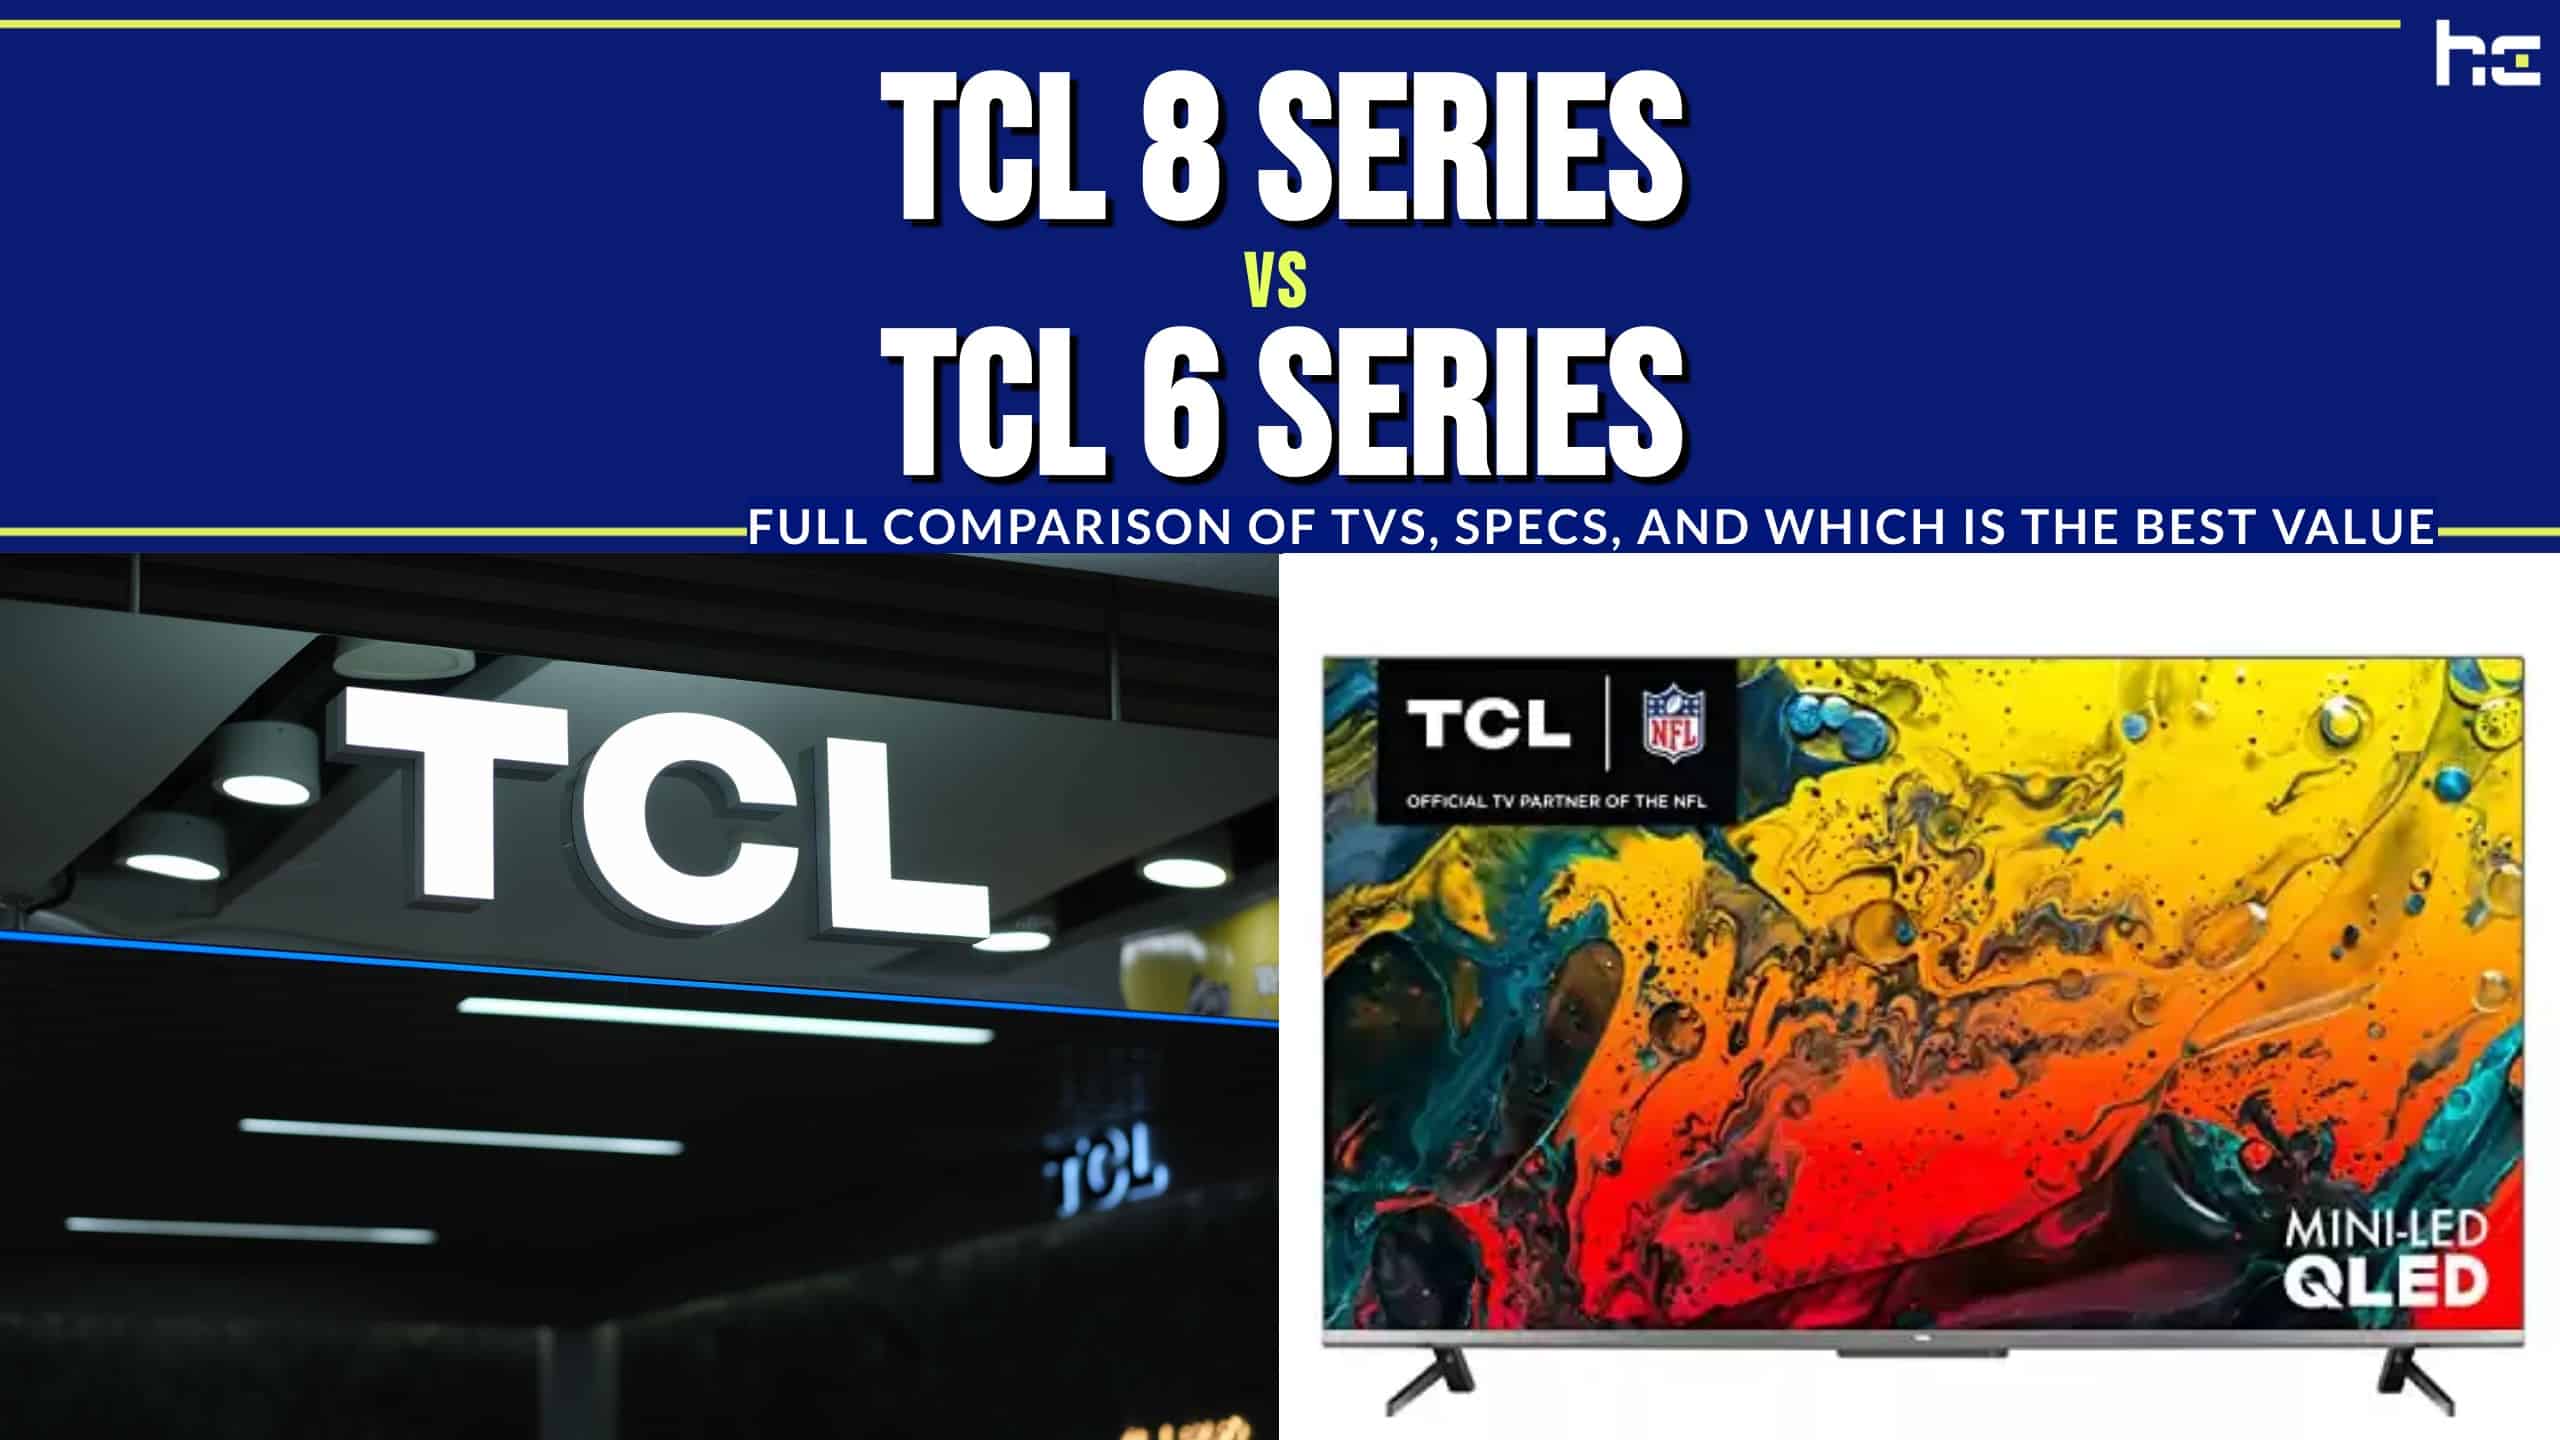 TCL 8 Series vs TCL 6 Series